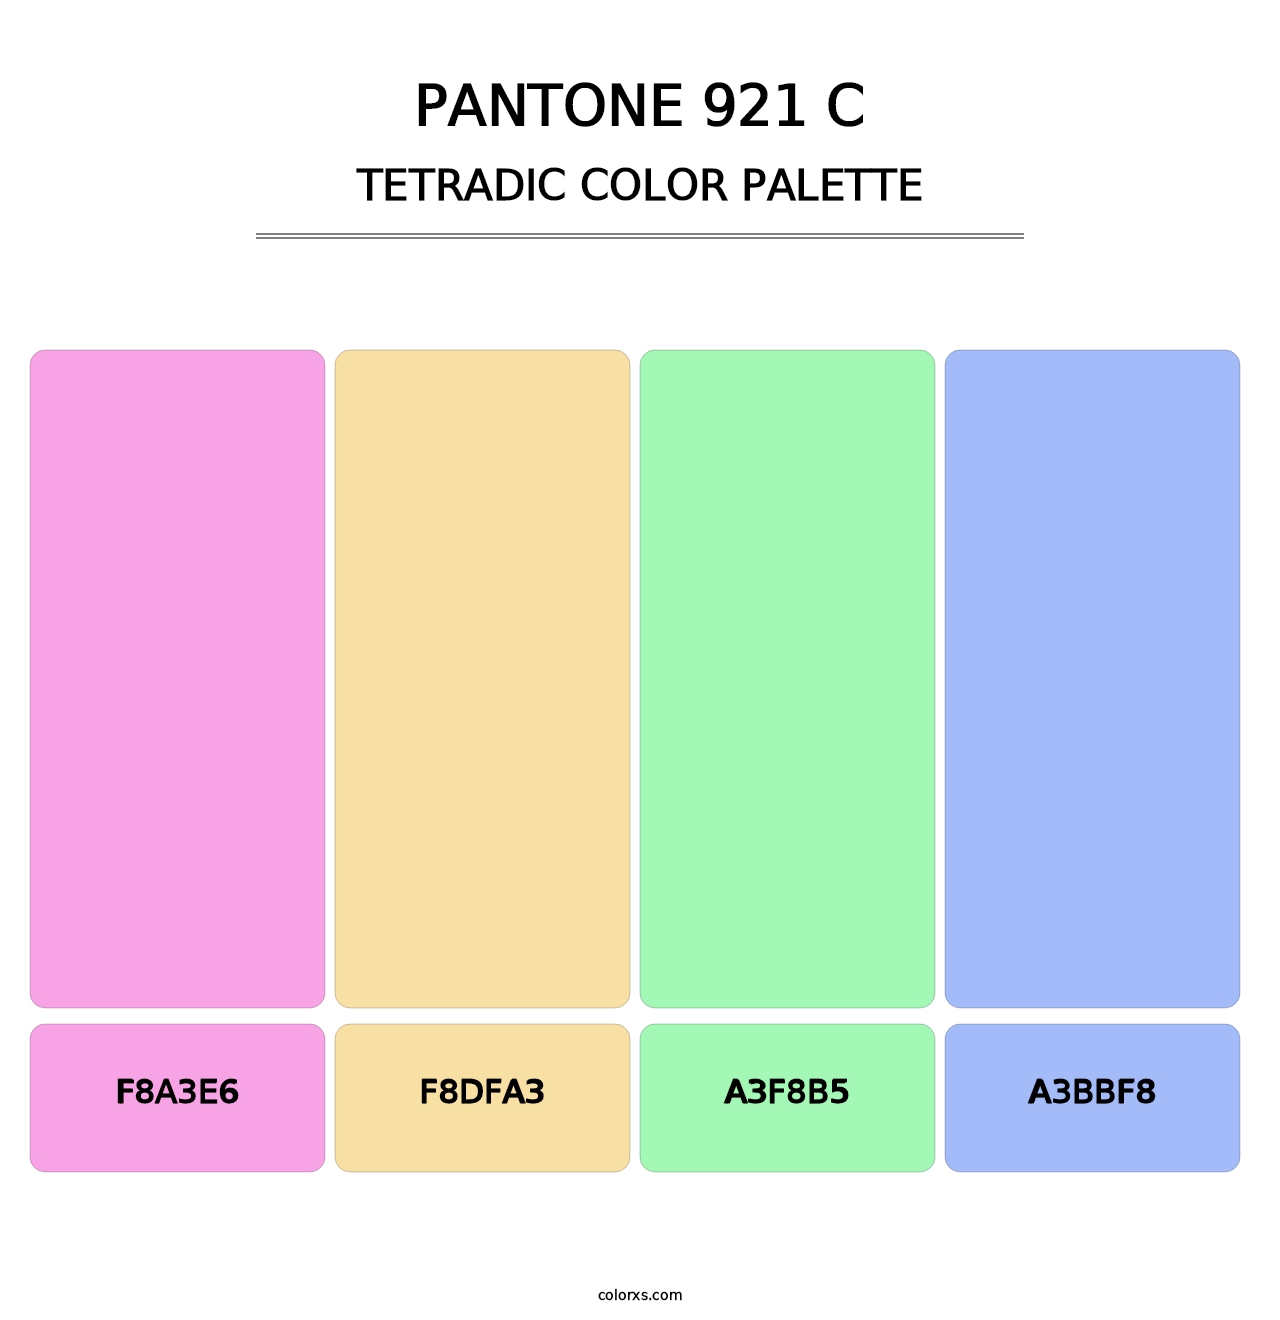 PANTONE 921 C - Tetradic Color Palette